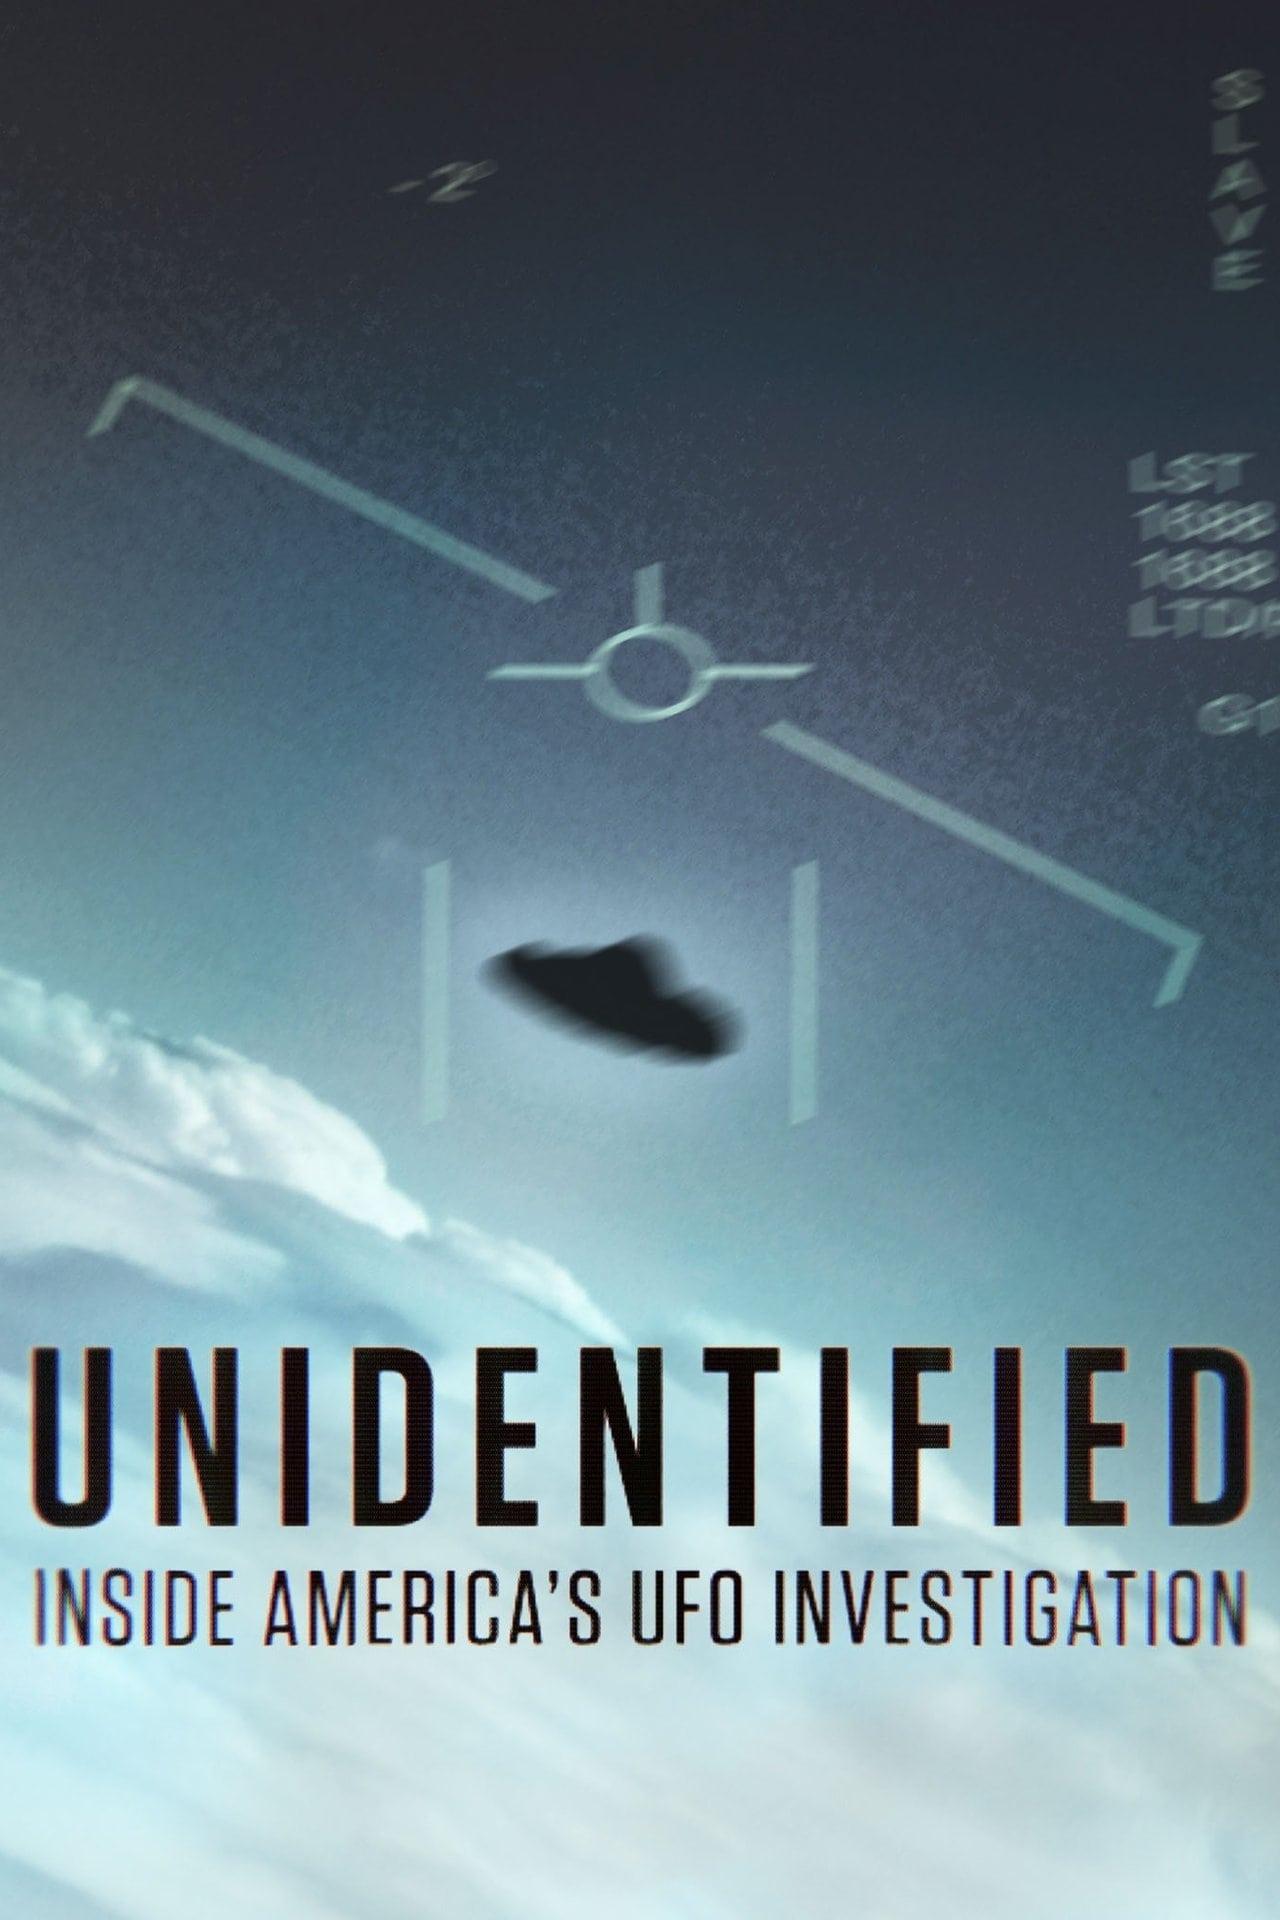 Unidentified: Inside America's UFO Investigation poster